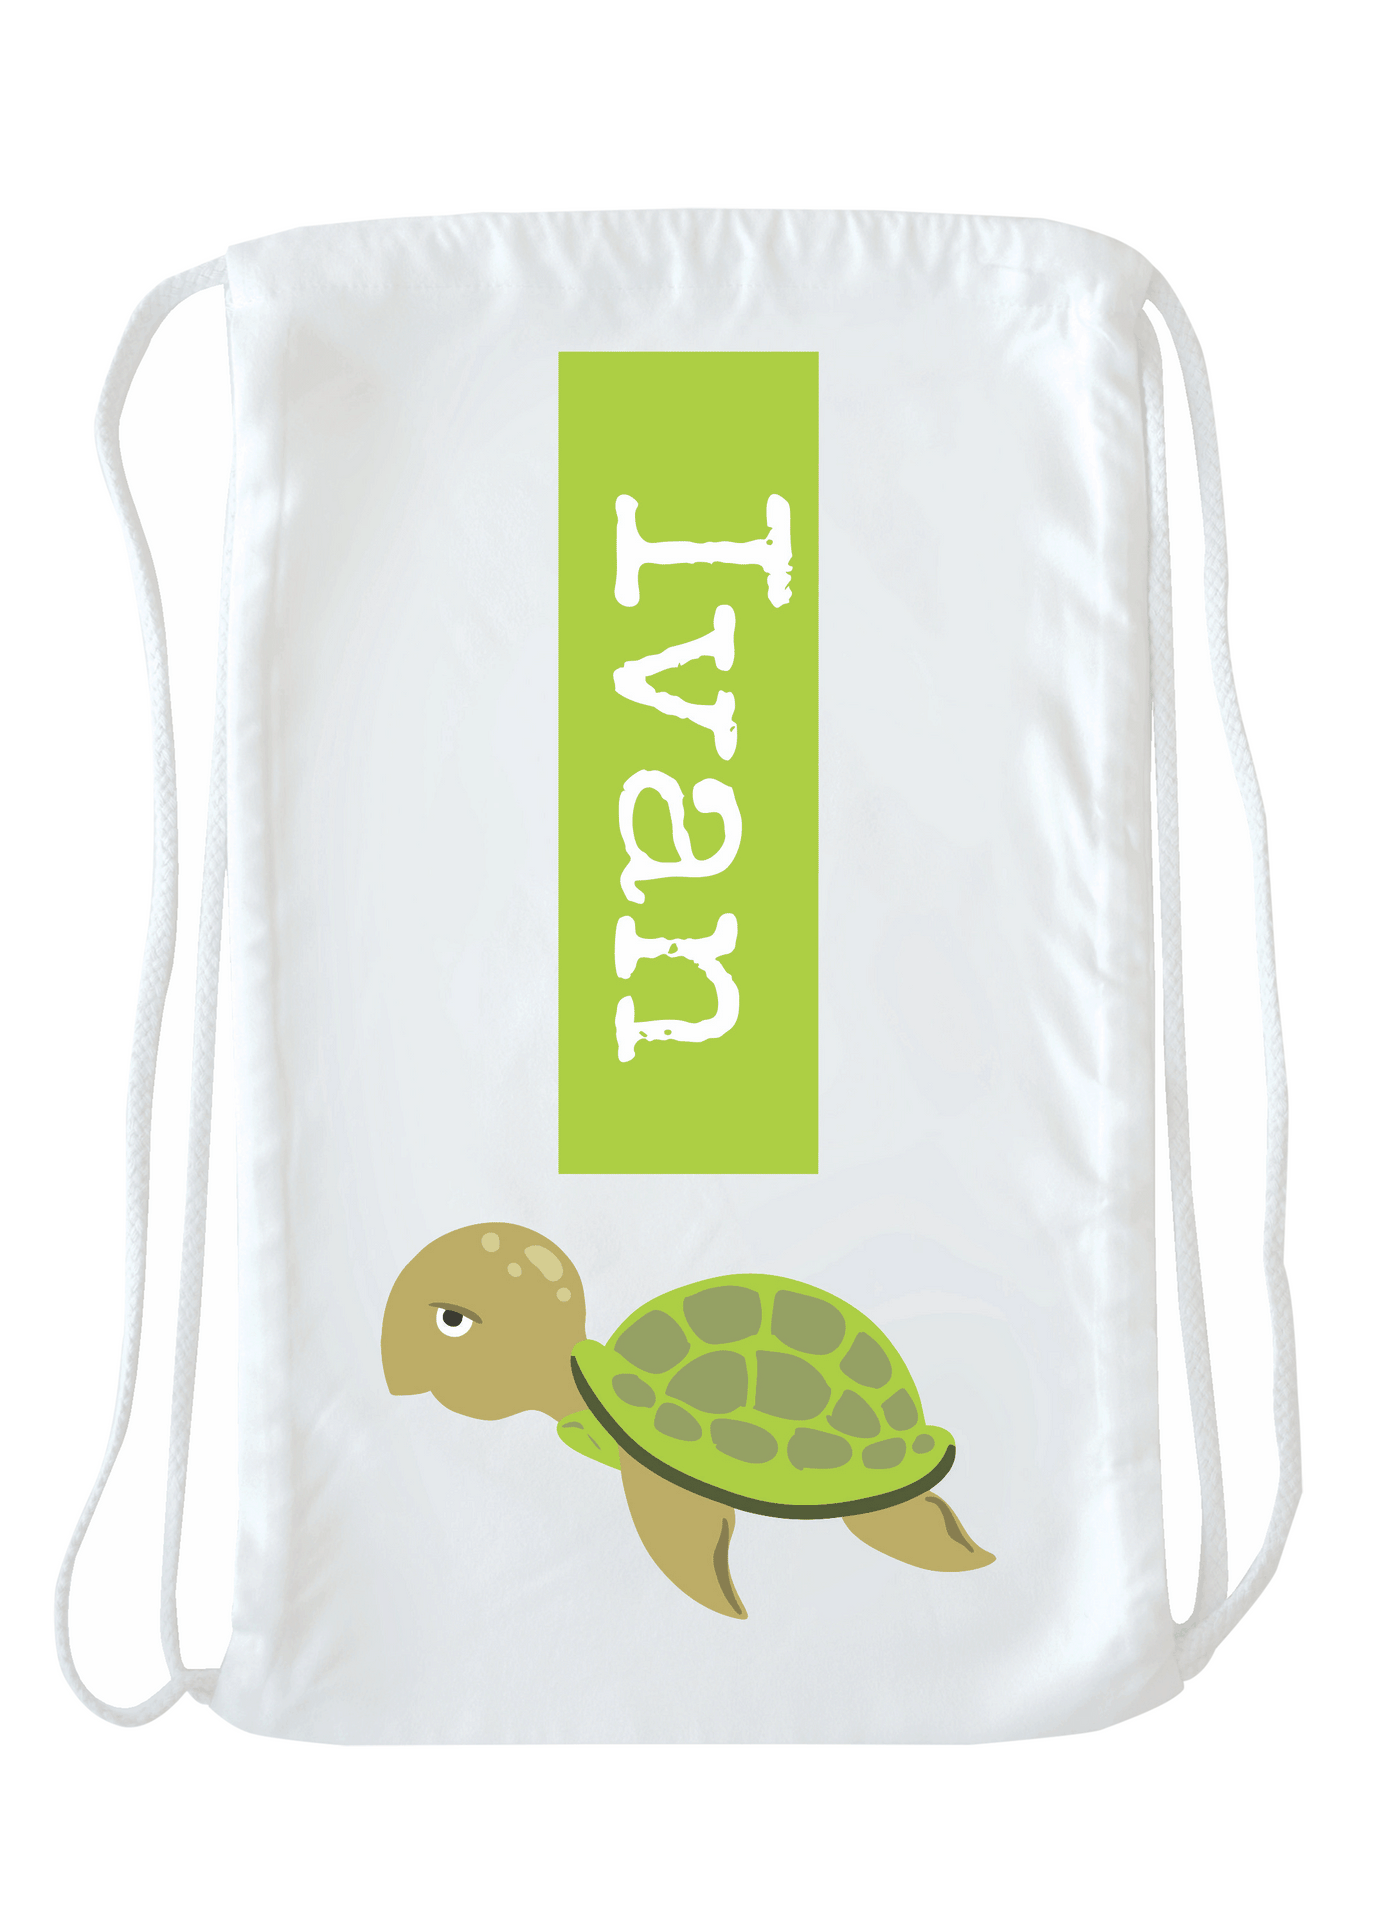 Turtle Bag